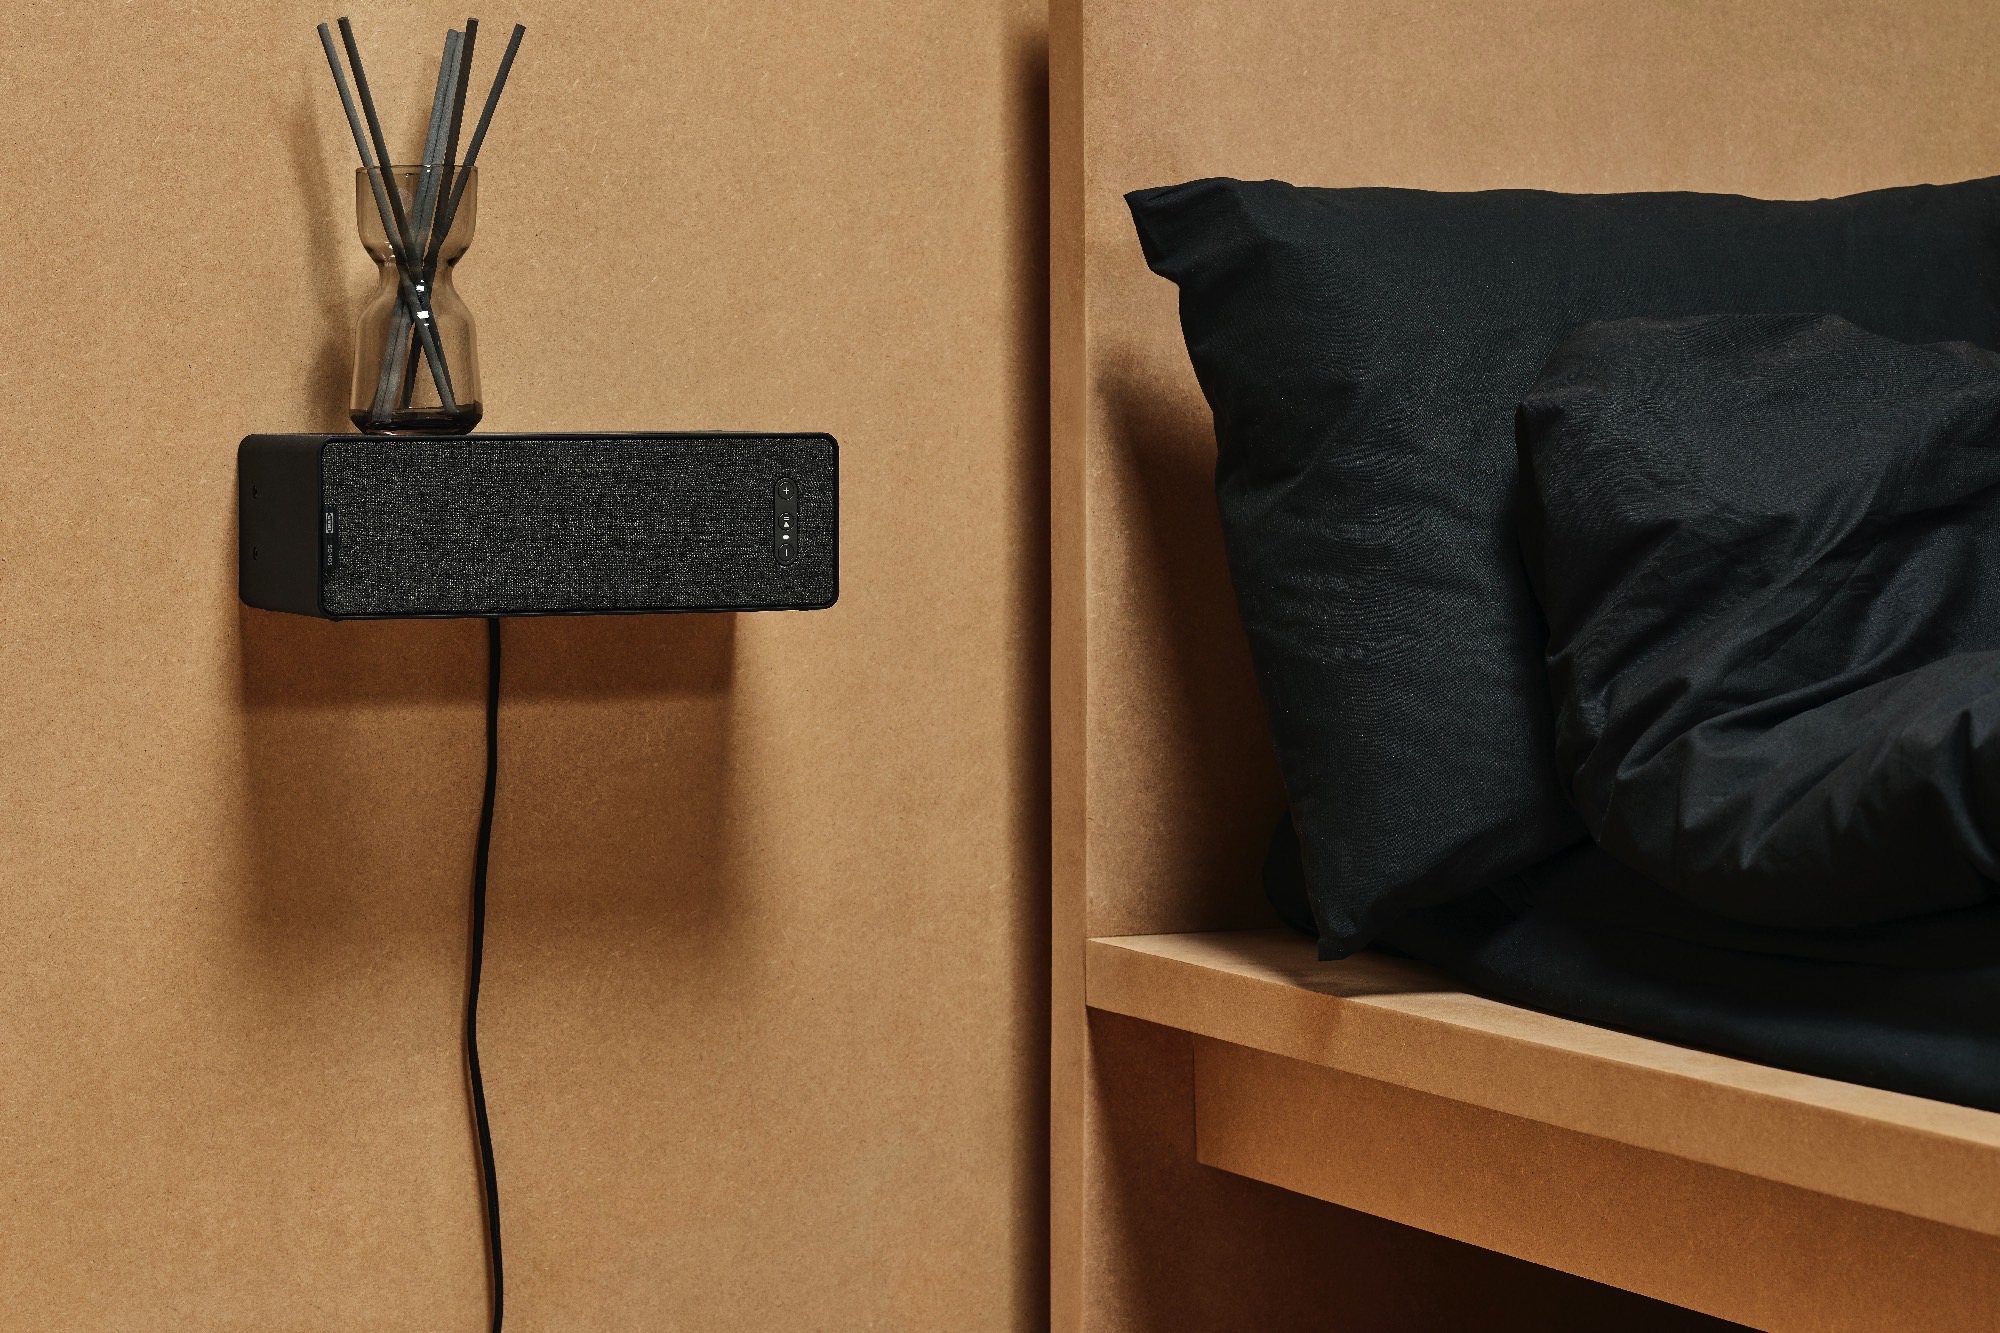 IKEA Symfonisk book-shelf with Wi-Fi speaker